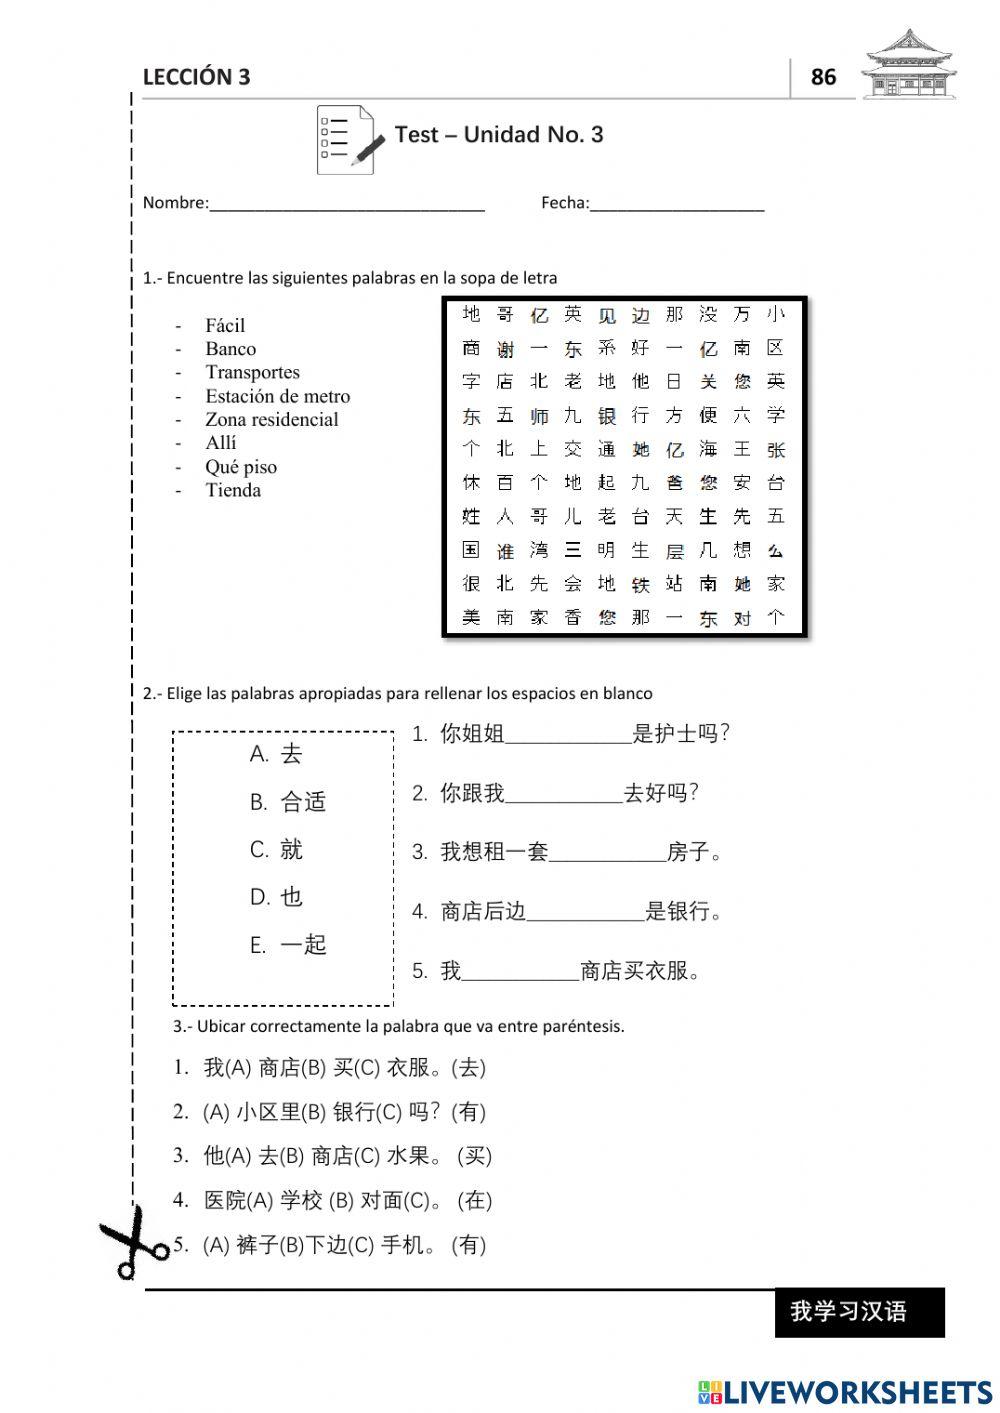 Libro wo xuexi hanyu modulo 3 unidad 3